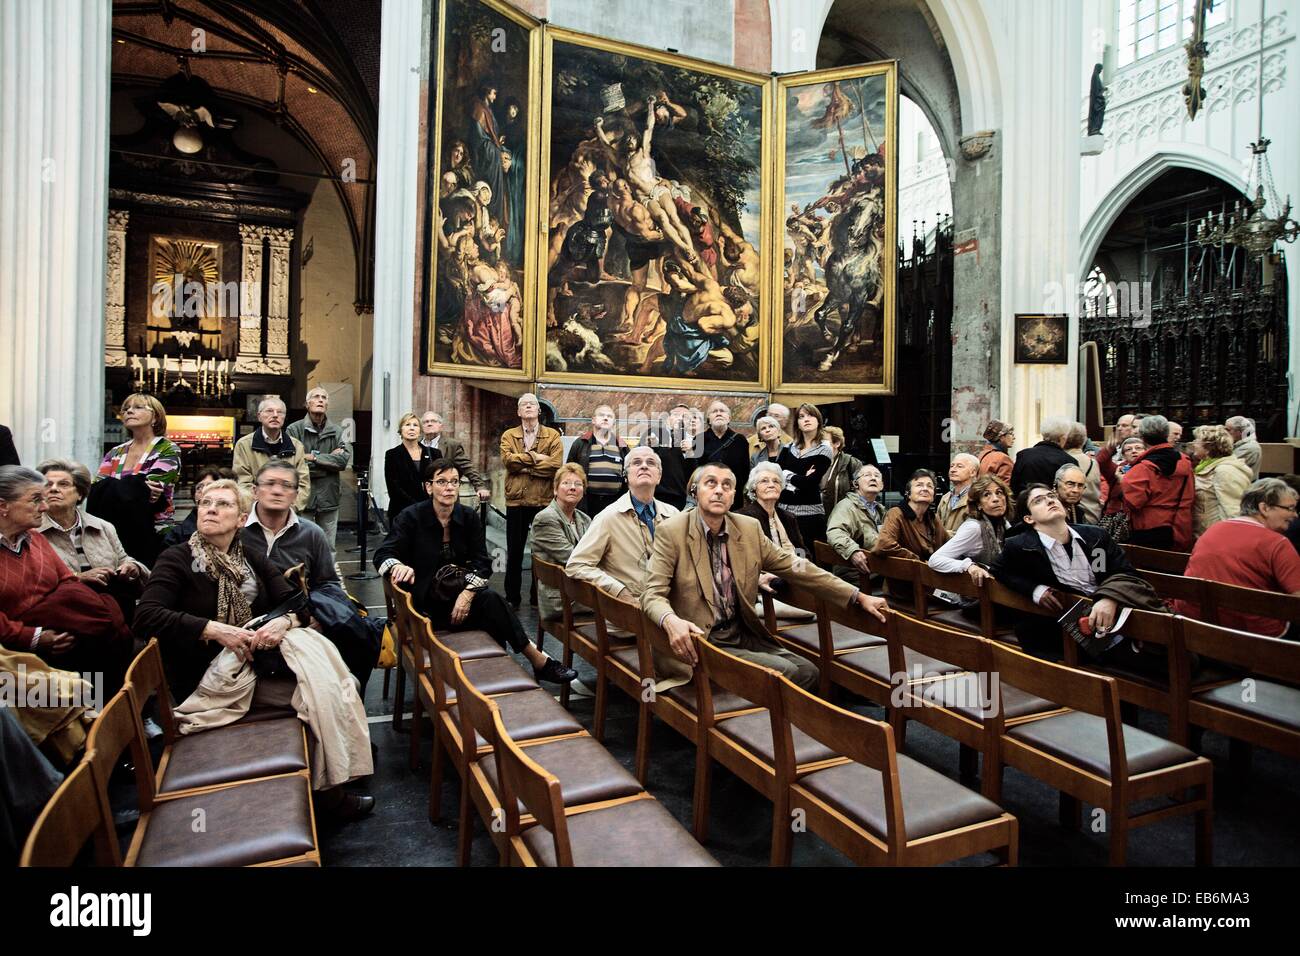 Raising of the cross, The cathedral, Antwerp, Flanders, Belgium. Stock Photo